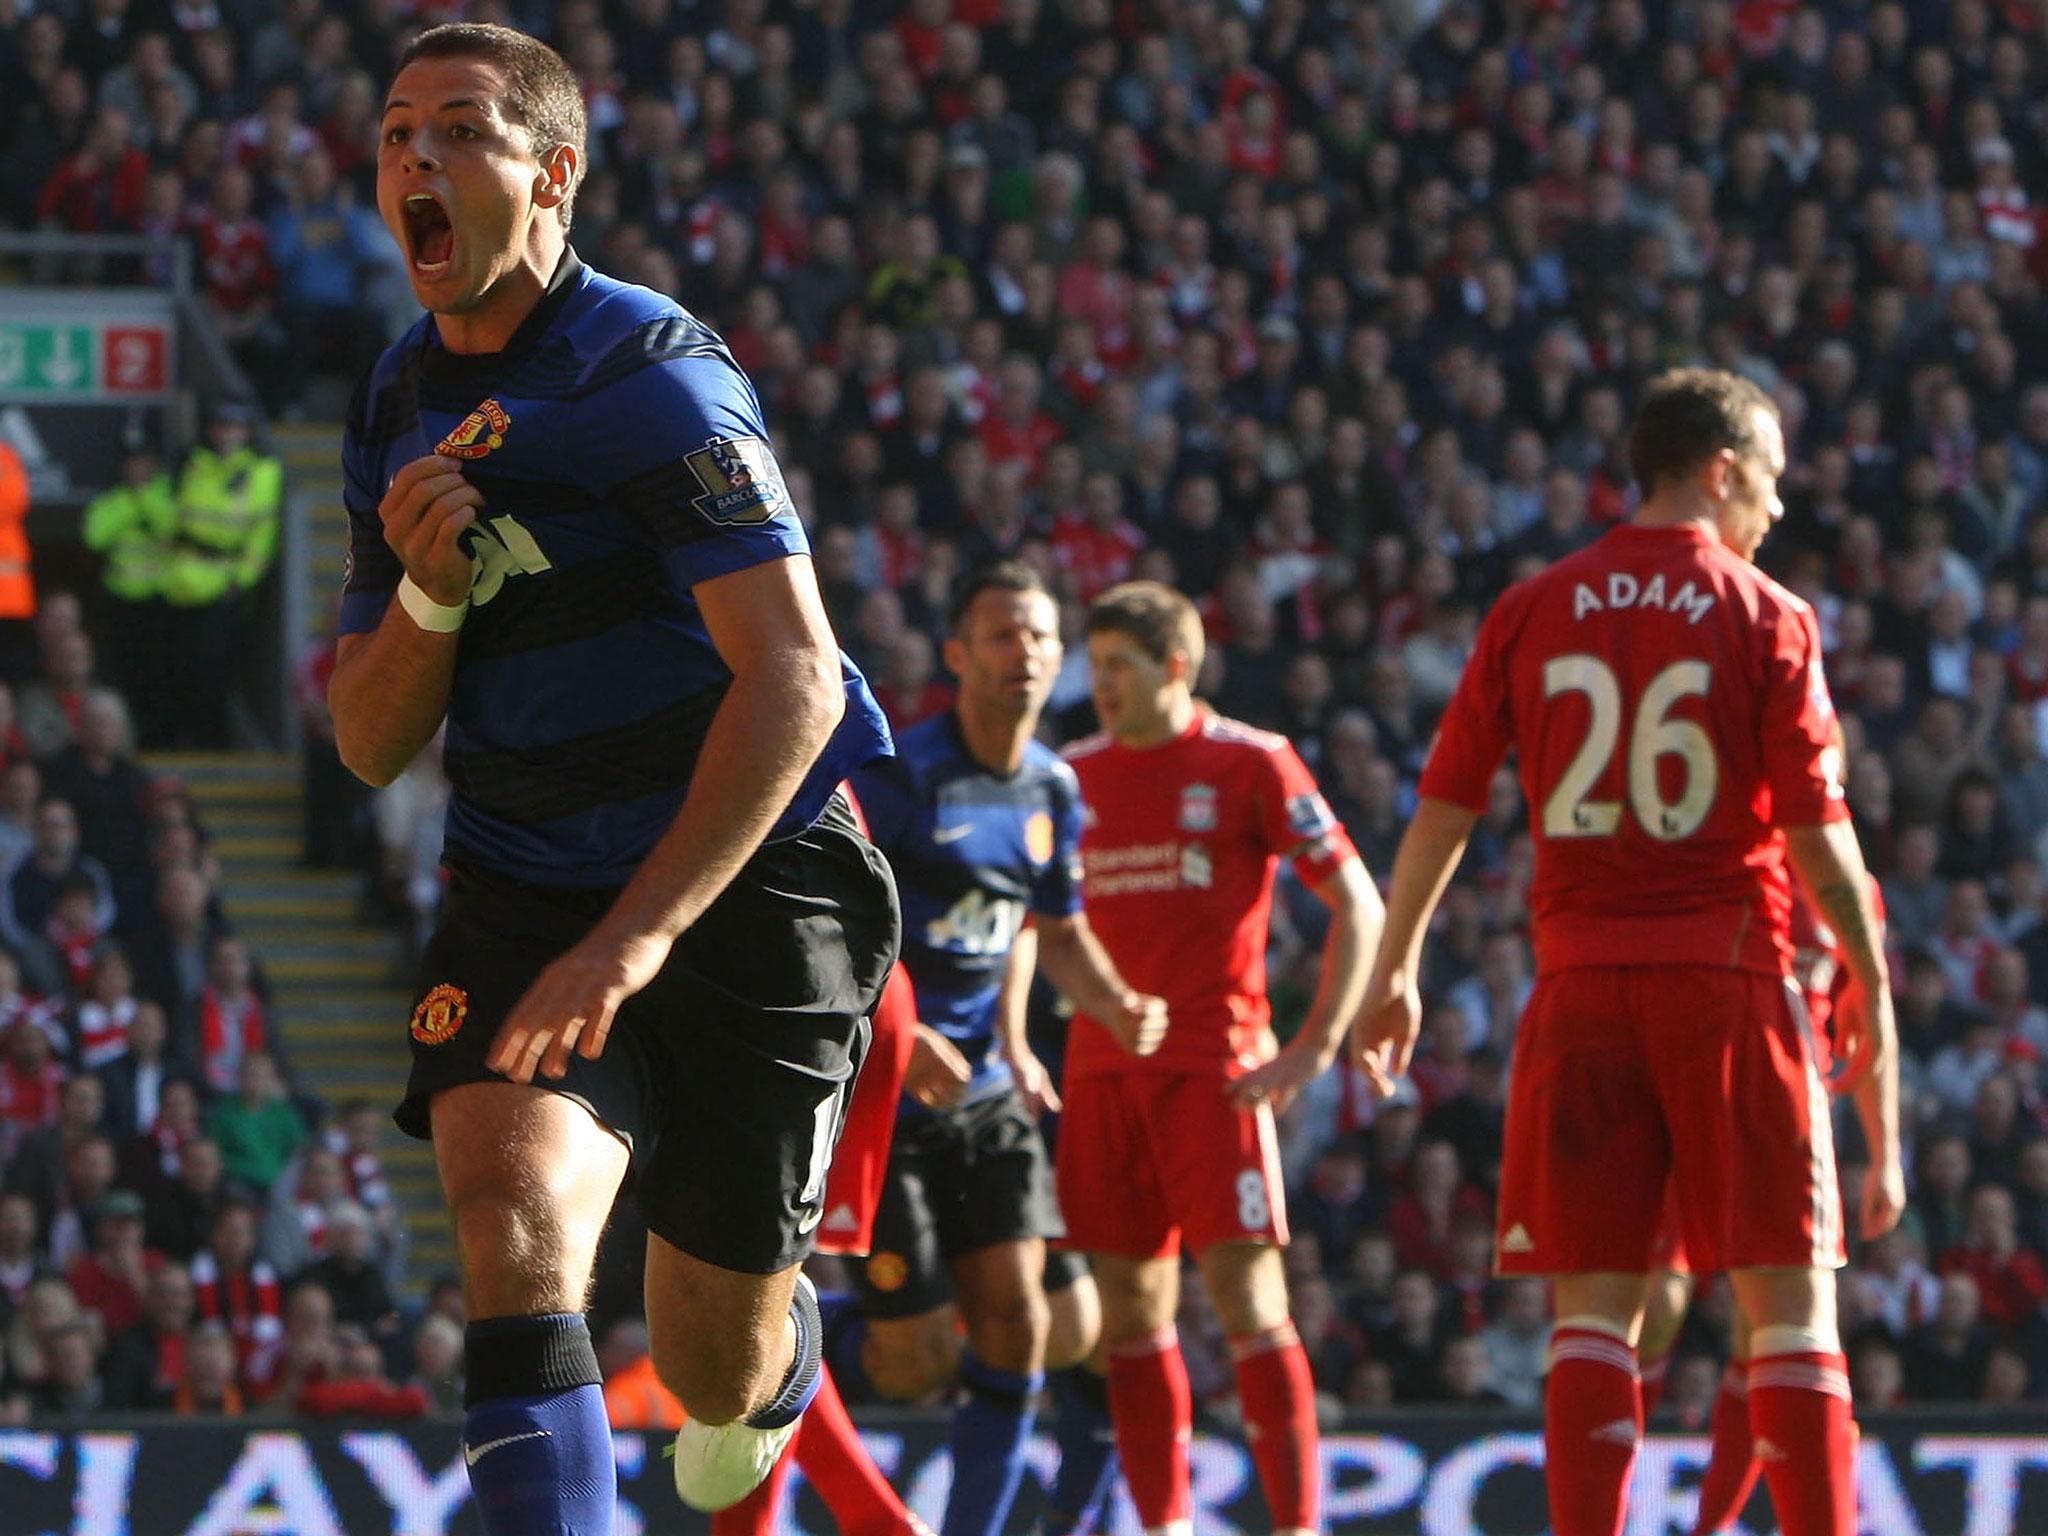 Chicharito scored 37 league goals for Liverpool rivals Manchester United